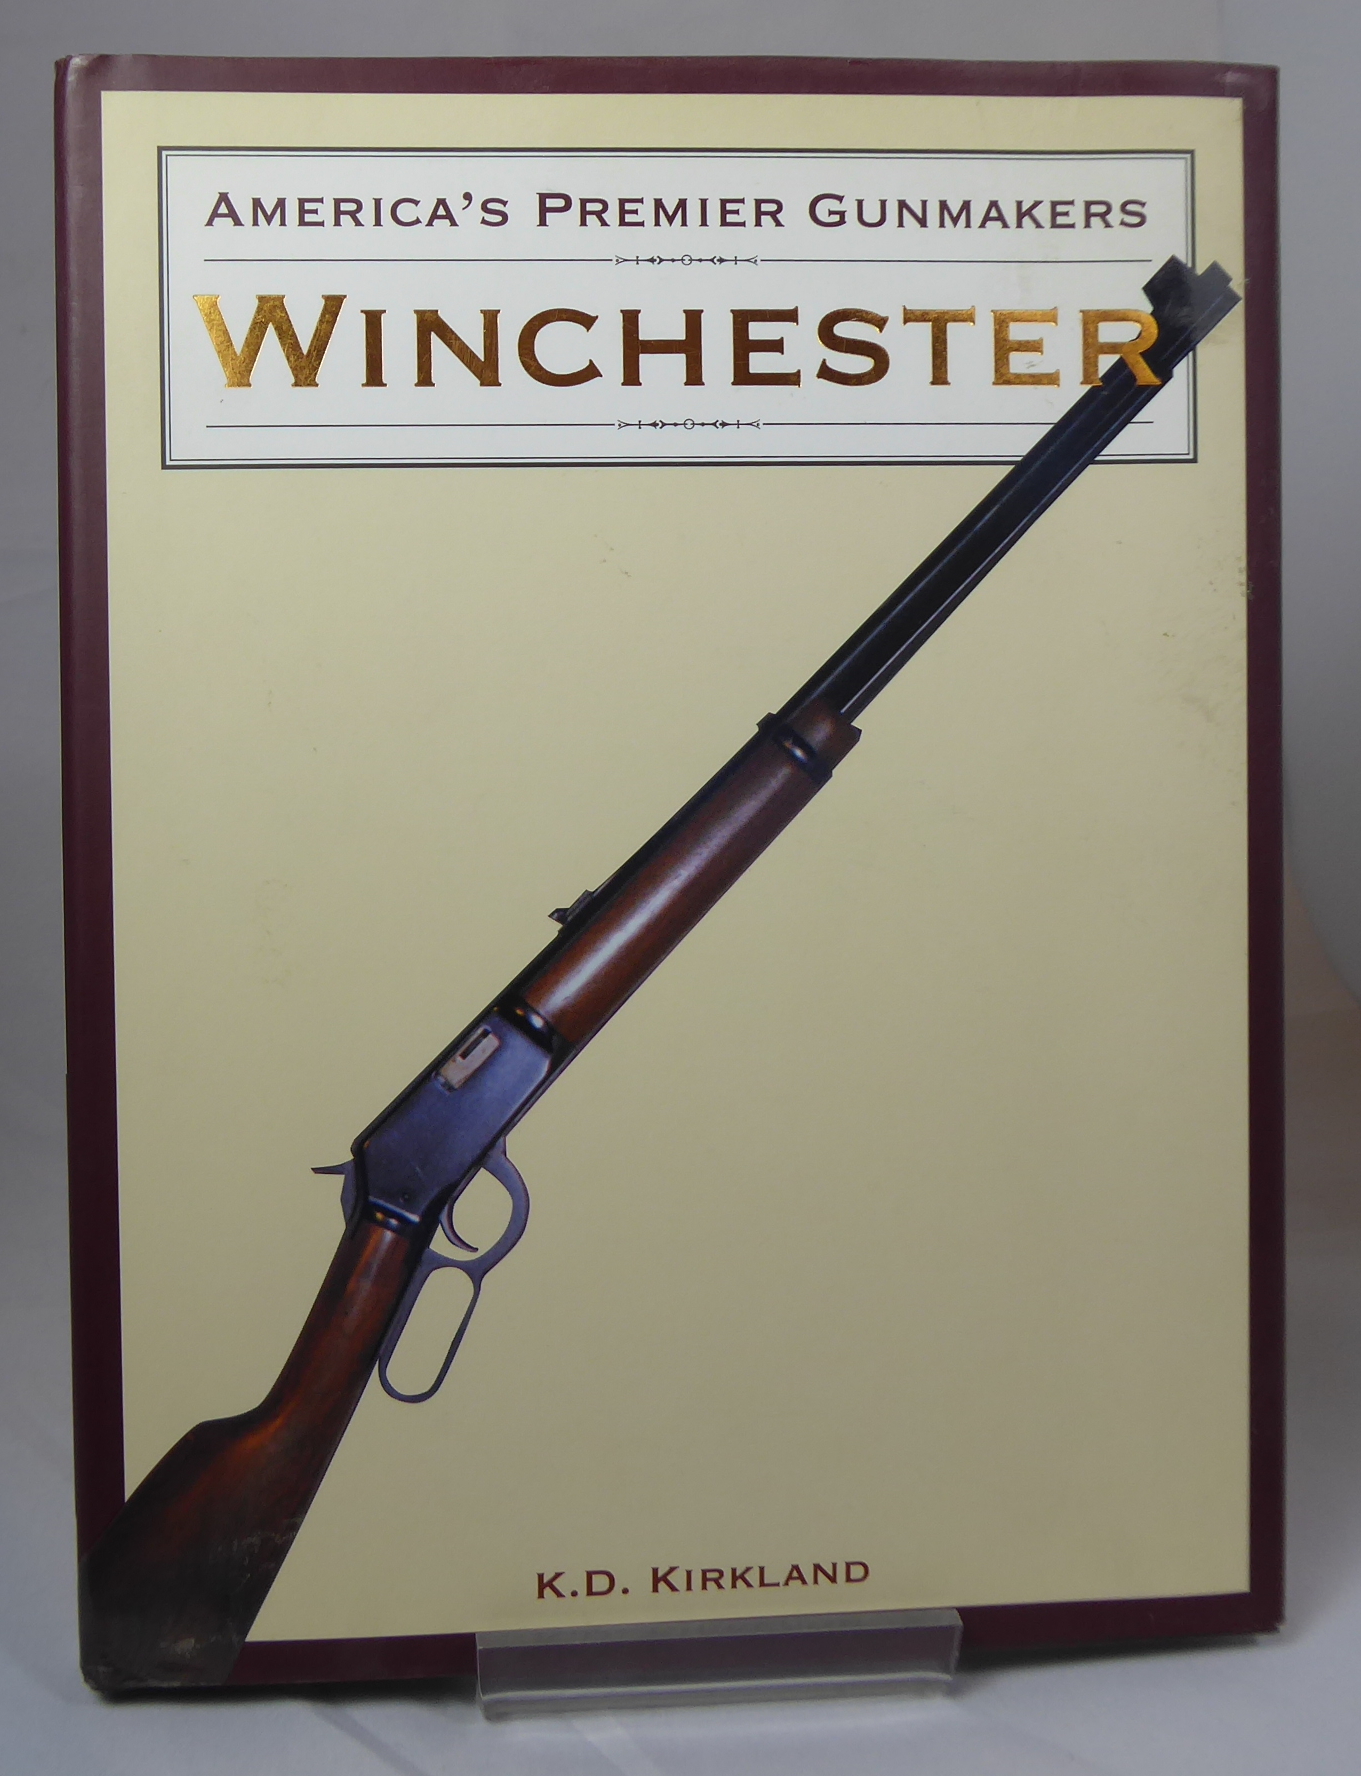 KIRKLAND, K. D. - America's Premier Gunmakers: Winchester